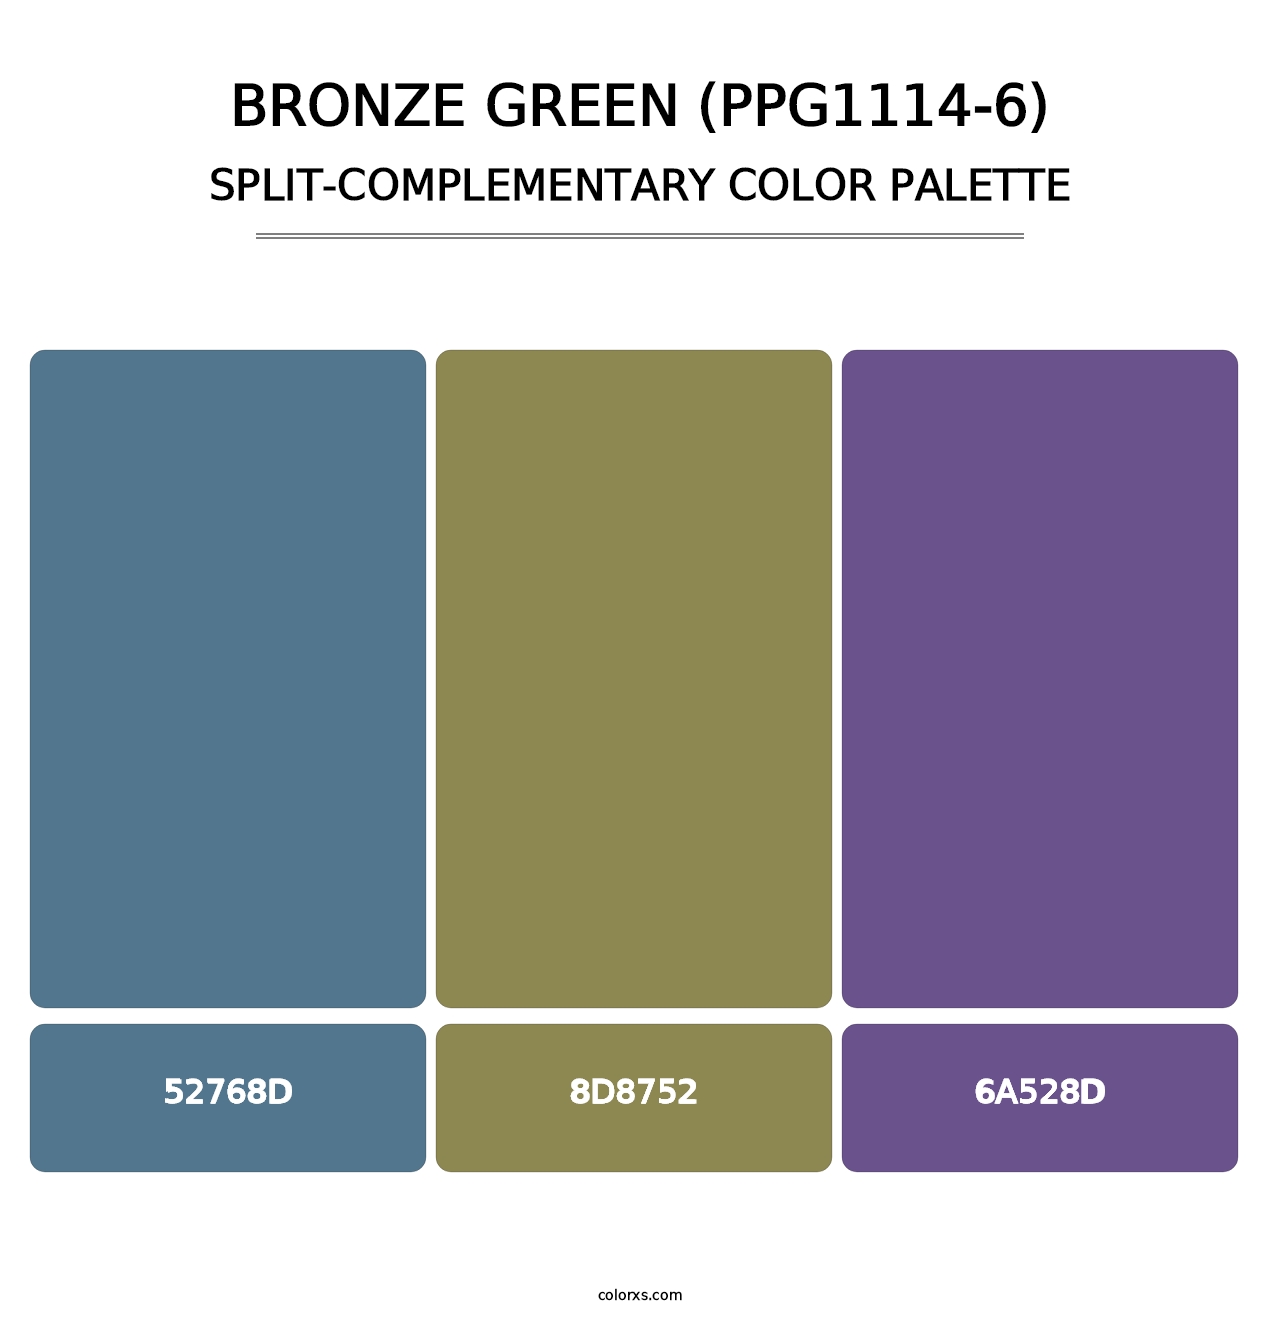 Bronze Green (PPG1114-6) - Split-Complementary Color Palette